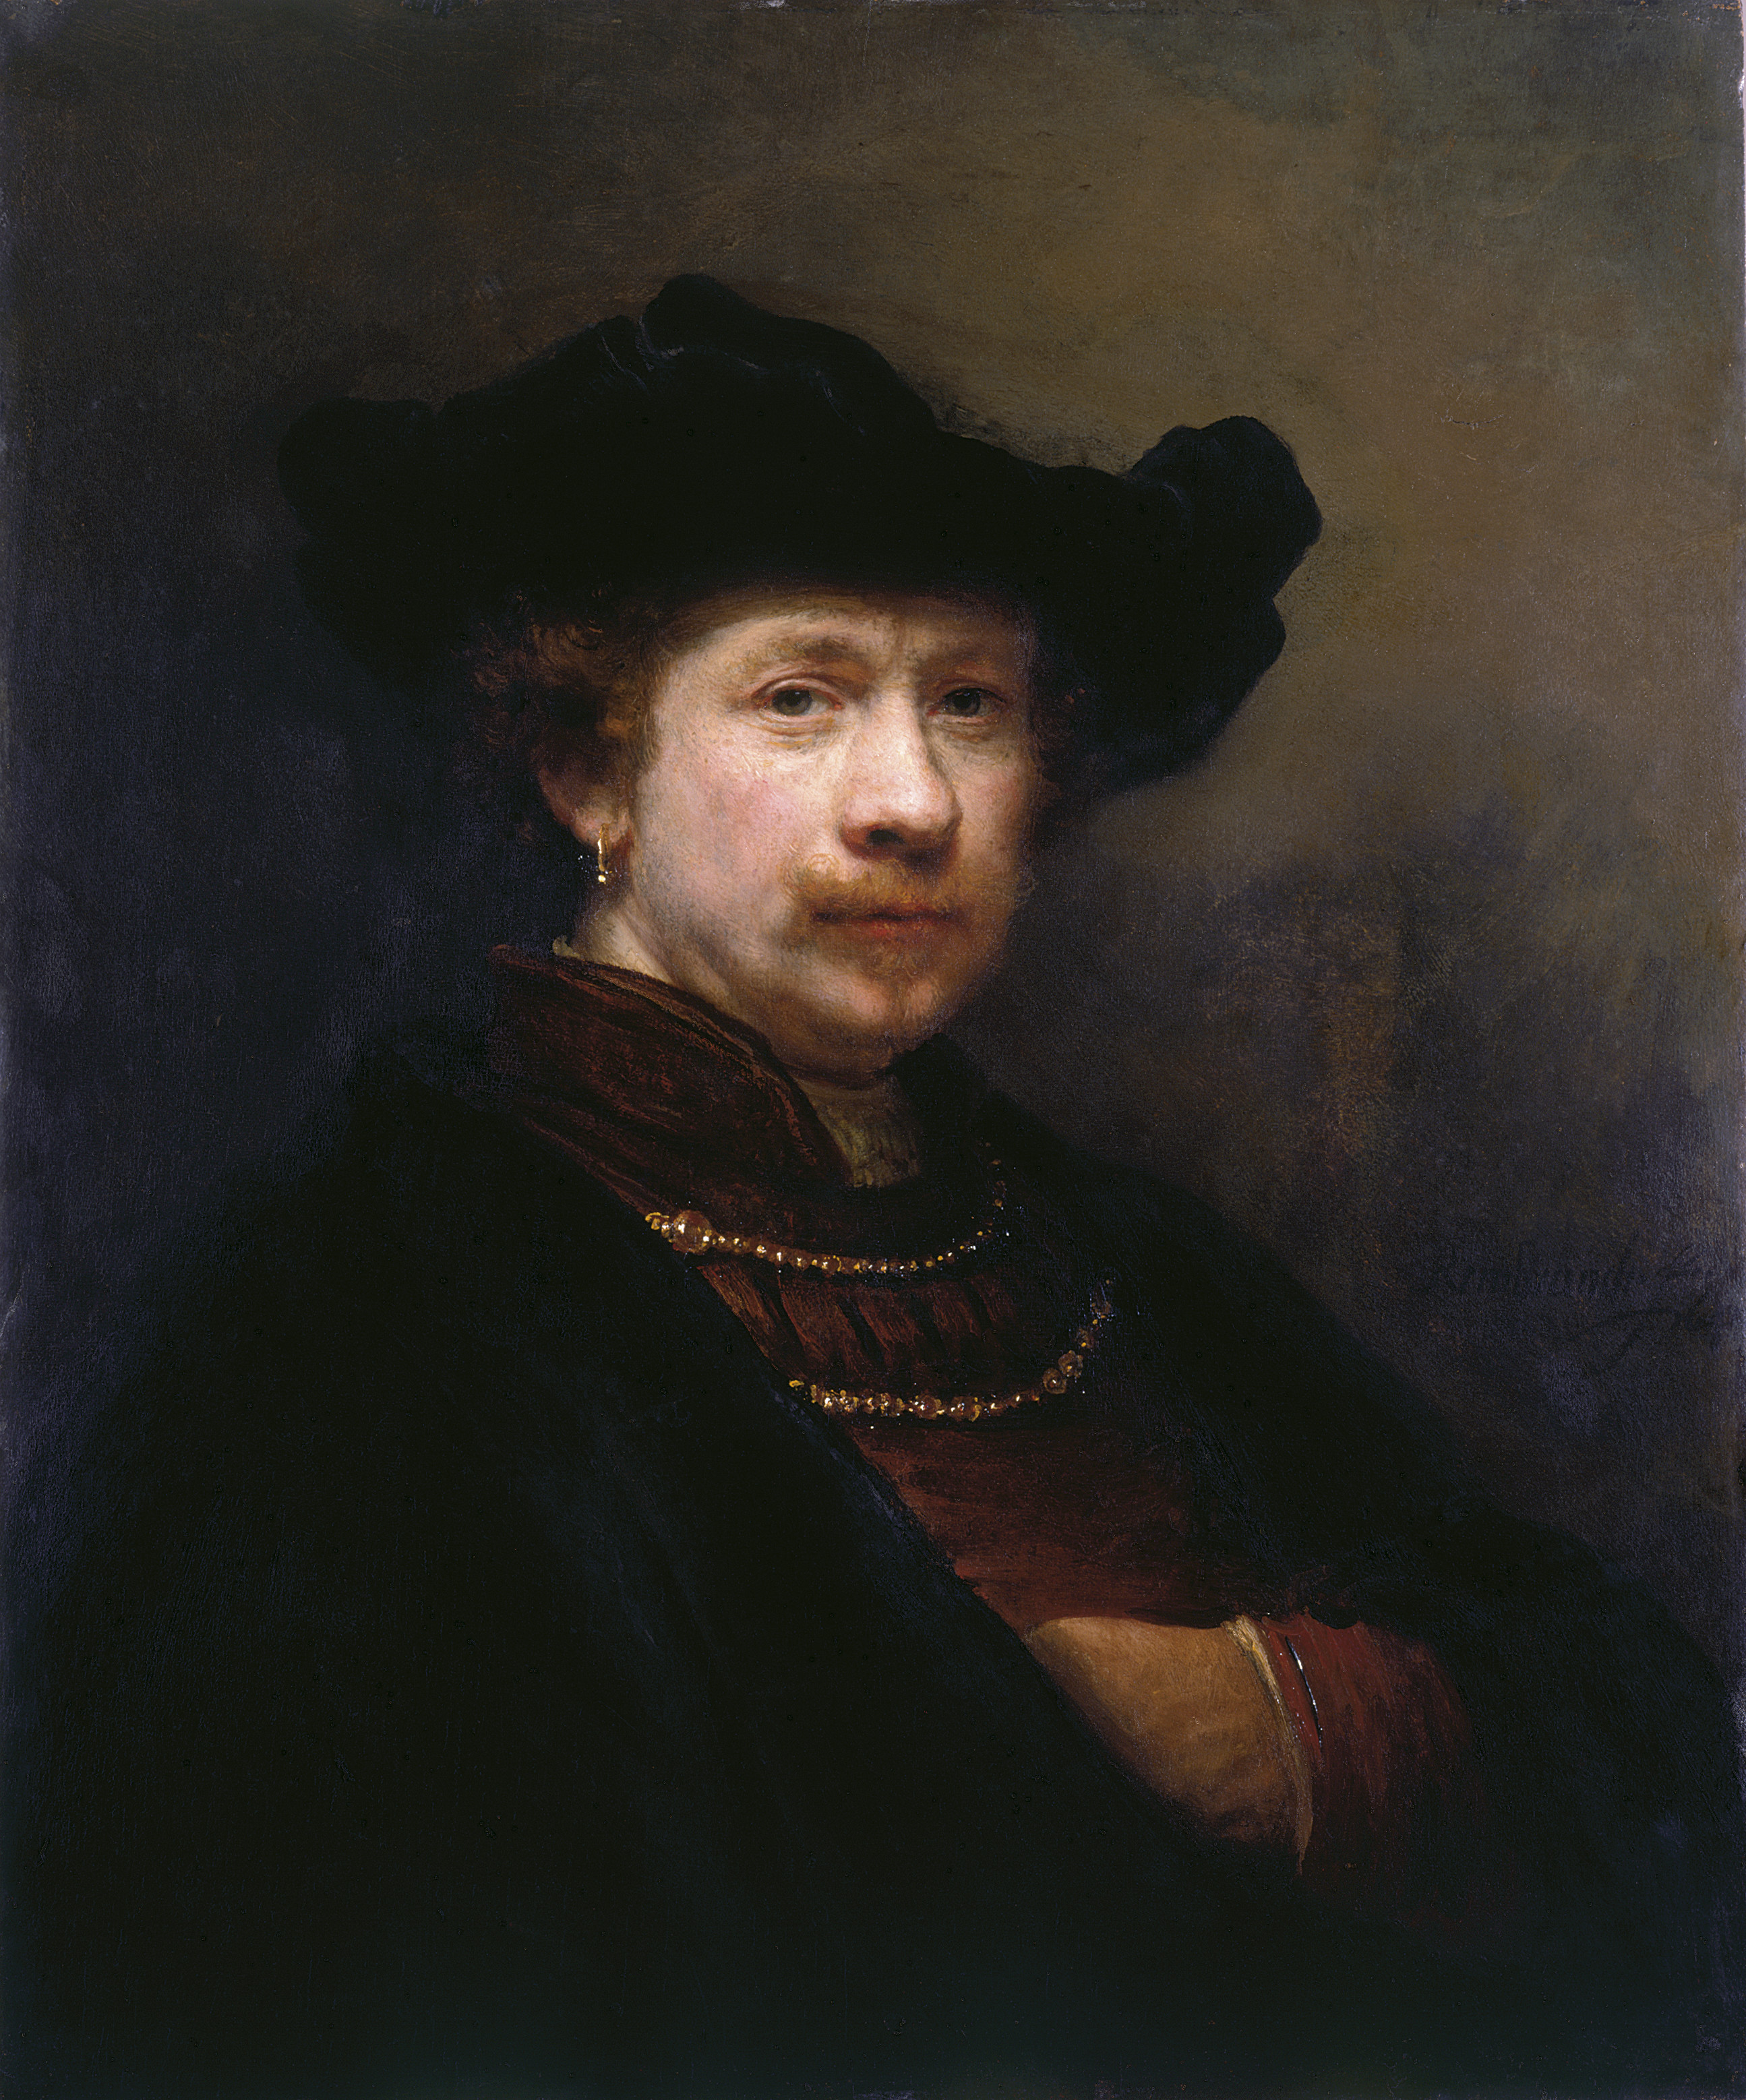 Self Portrait in a Flat Cap by Rembrandt van Rijn - 1642 Dulwich Picture Gallery